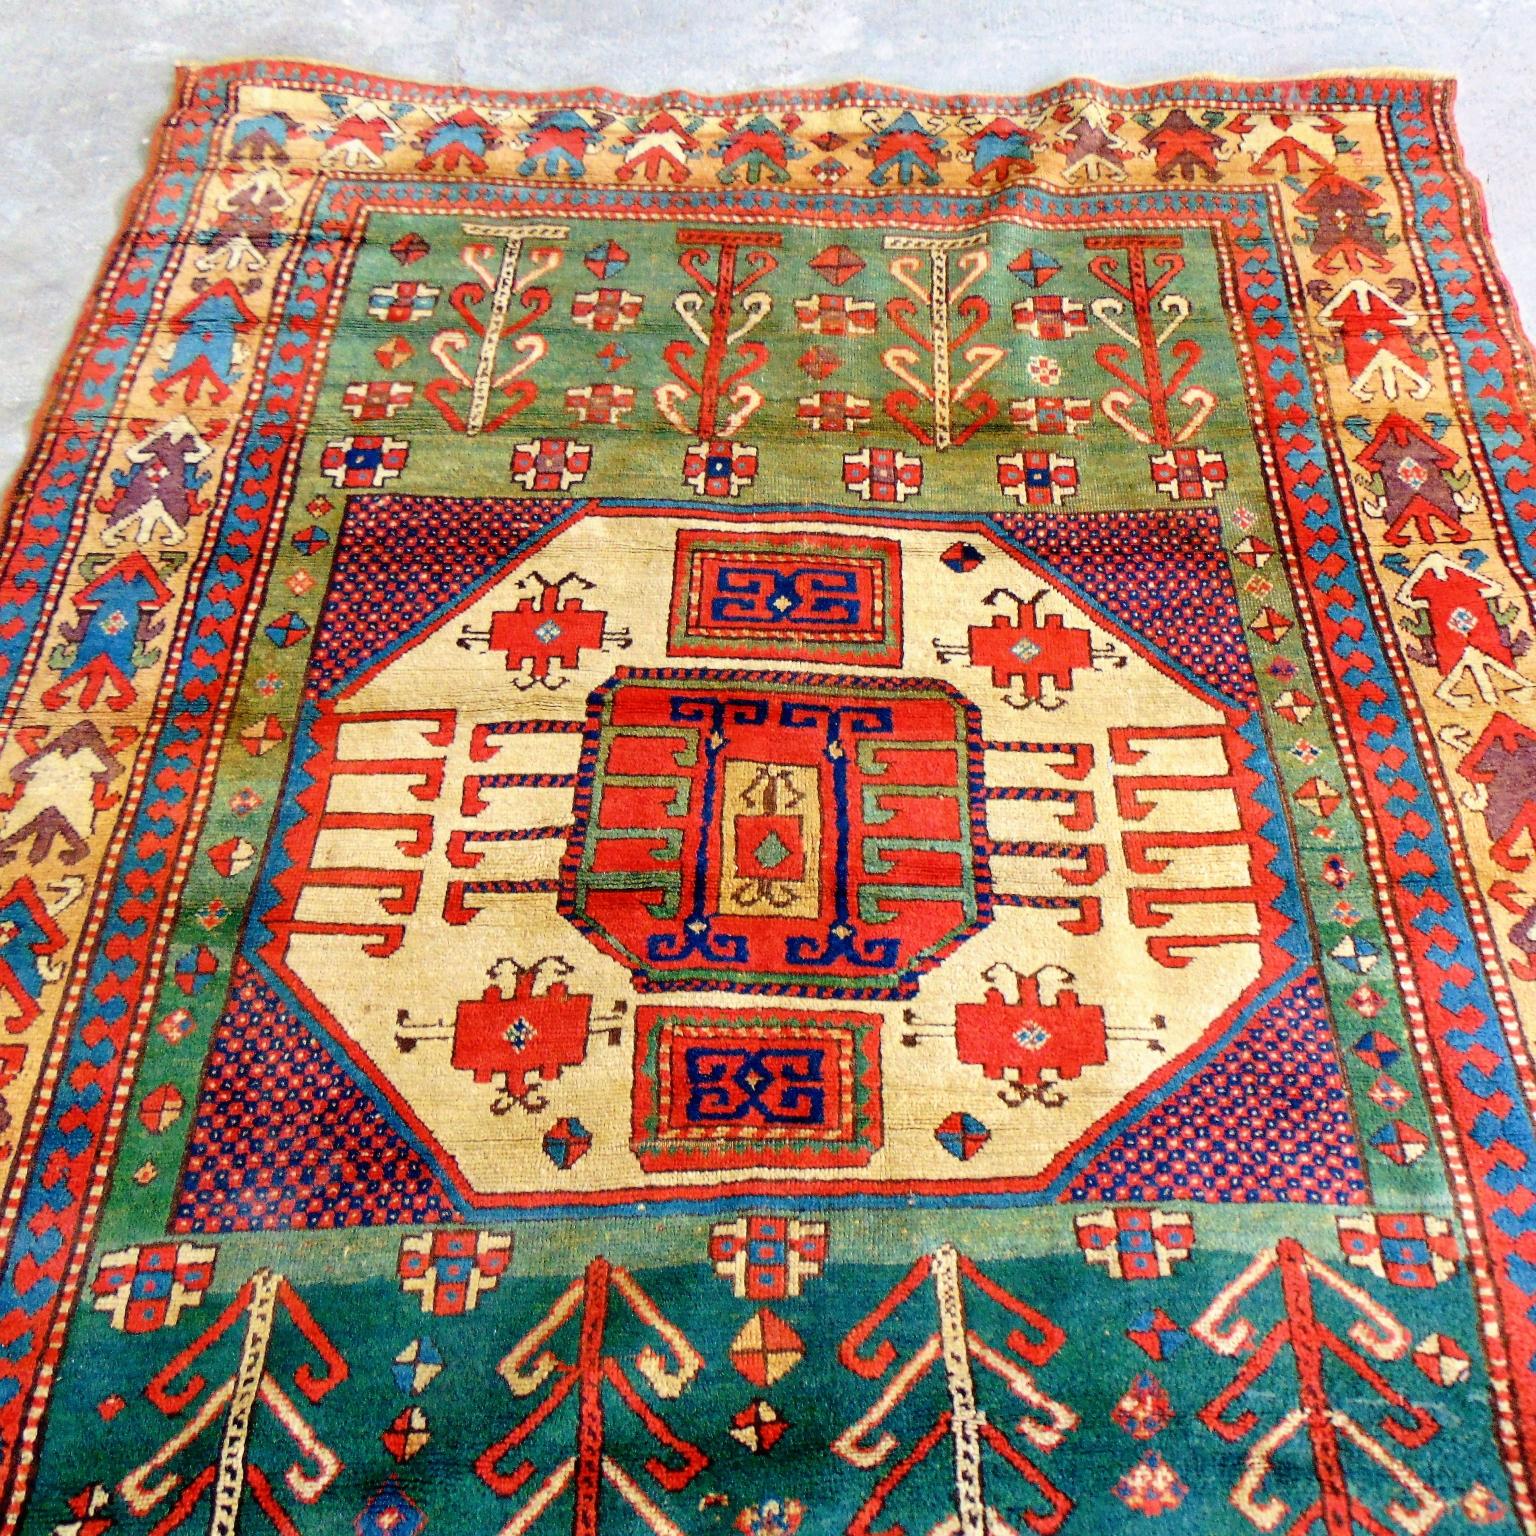 Wool 19th Century Antique Large Kazak Karachopf Rug, Handknotted Green Blue Red Beige For Sale